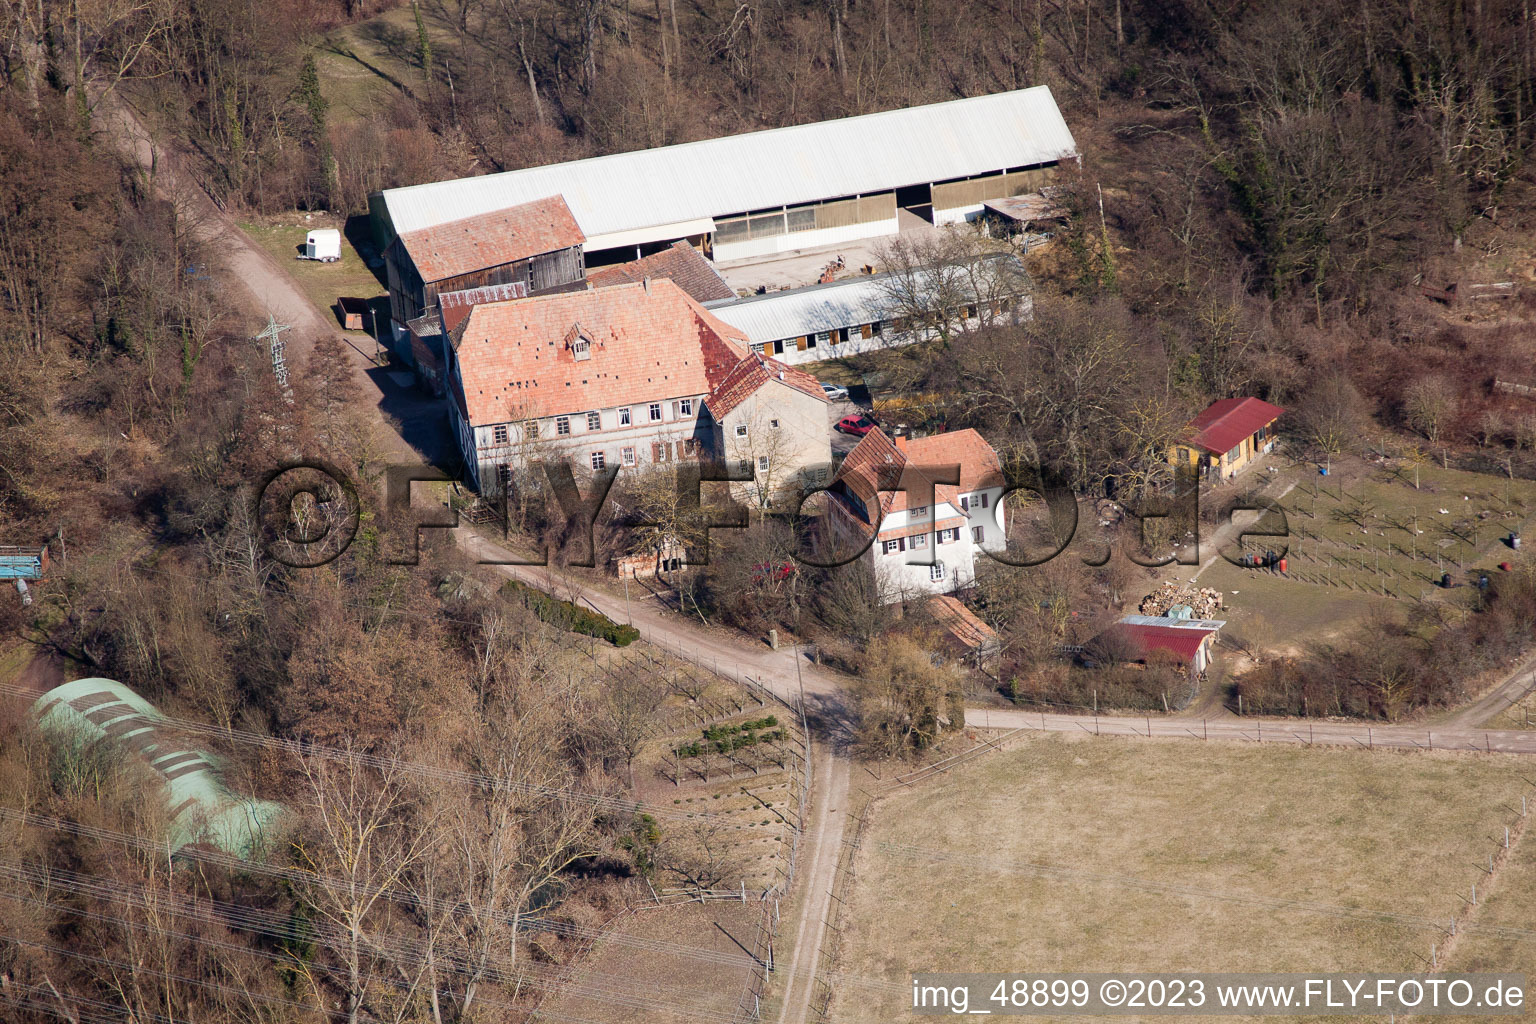 Wanzheim Mill in Rheinzabern in the state Rhineland-Palatinate, Germany seen from above